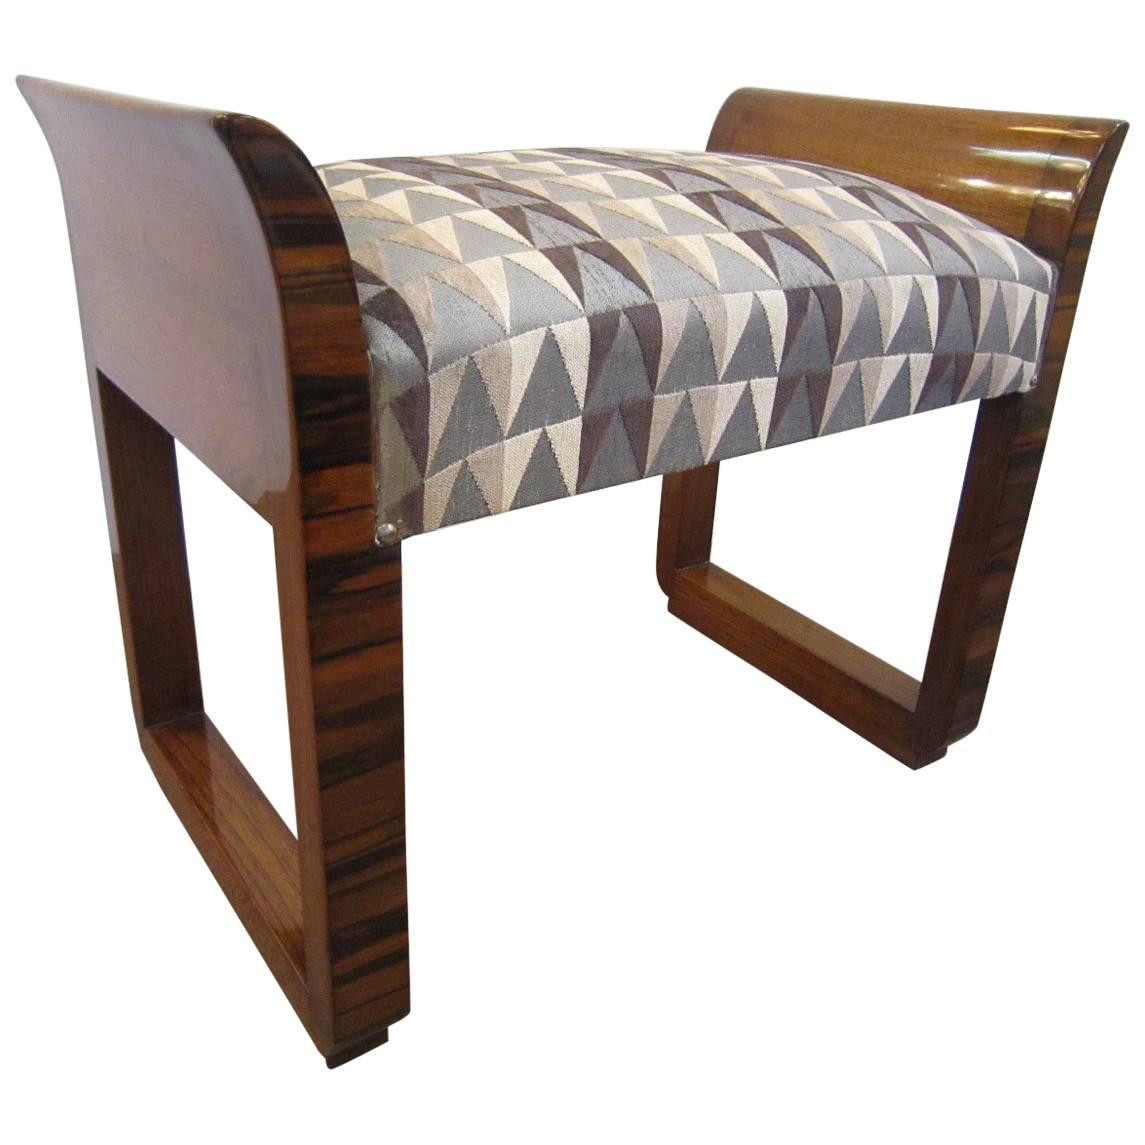 Fabulous Modernist Cubist Design, Macassar Ebony Upholstered Bench